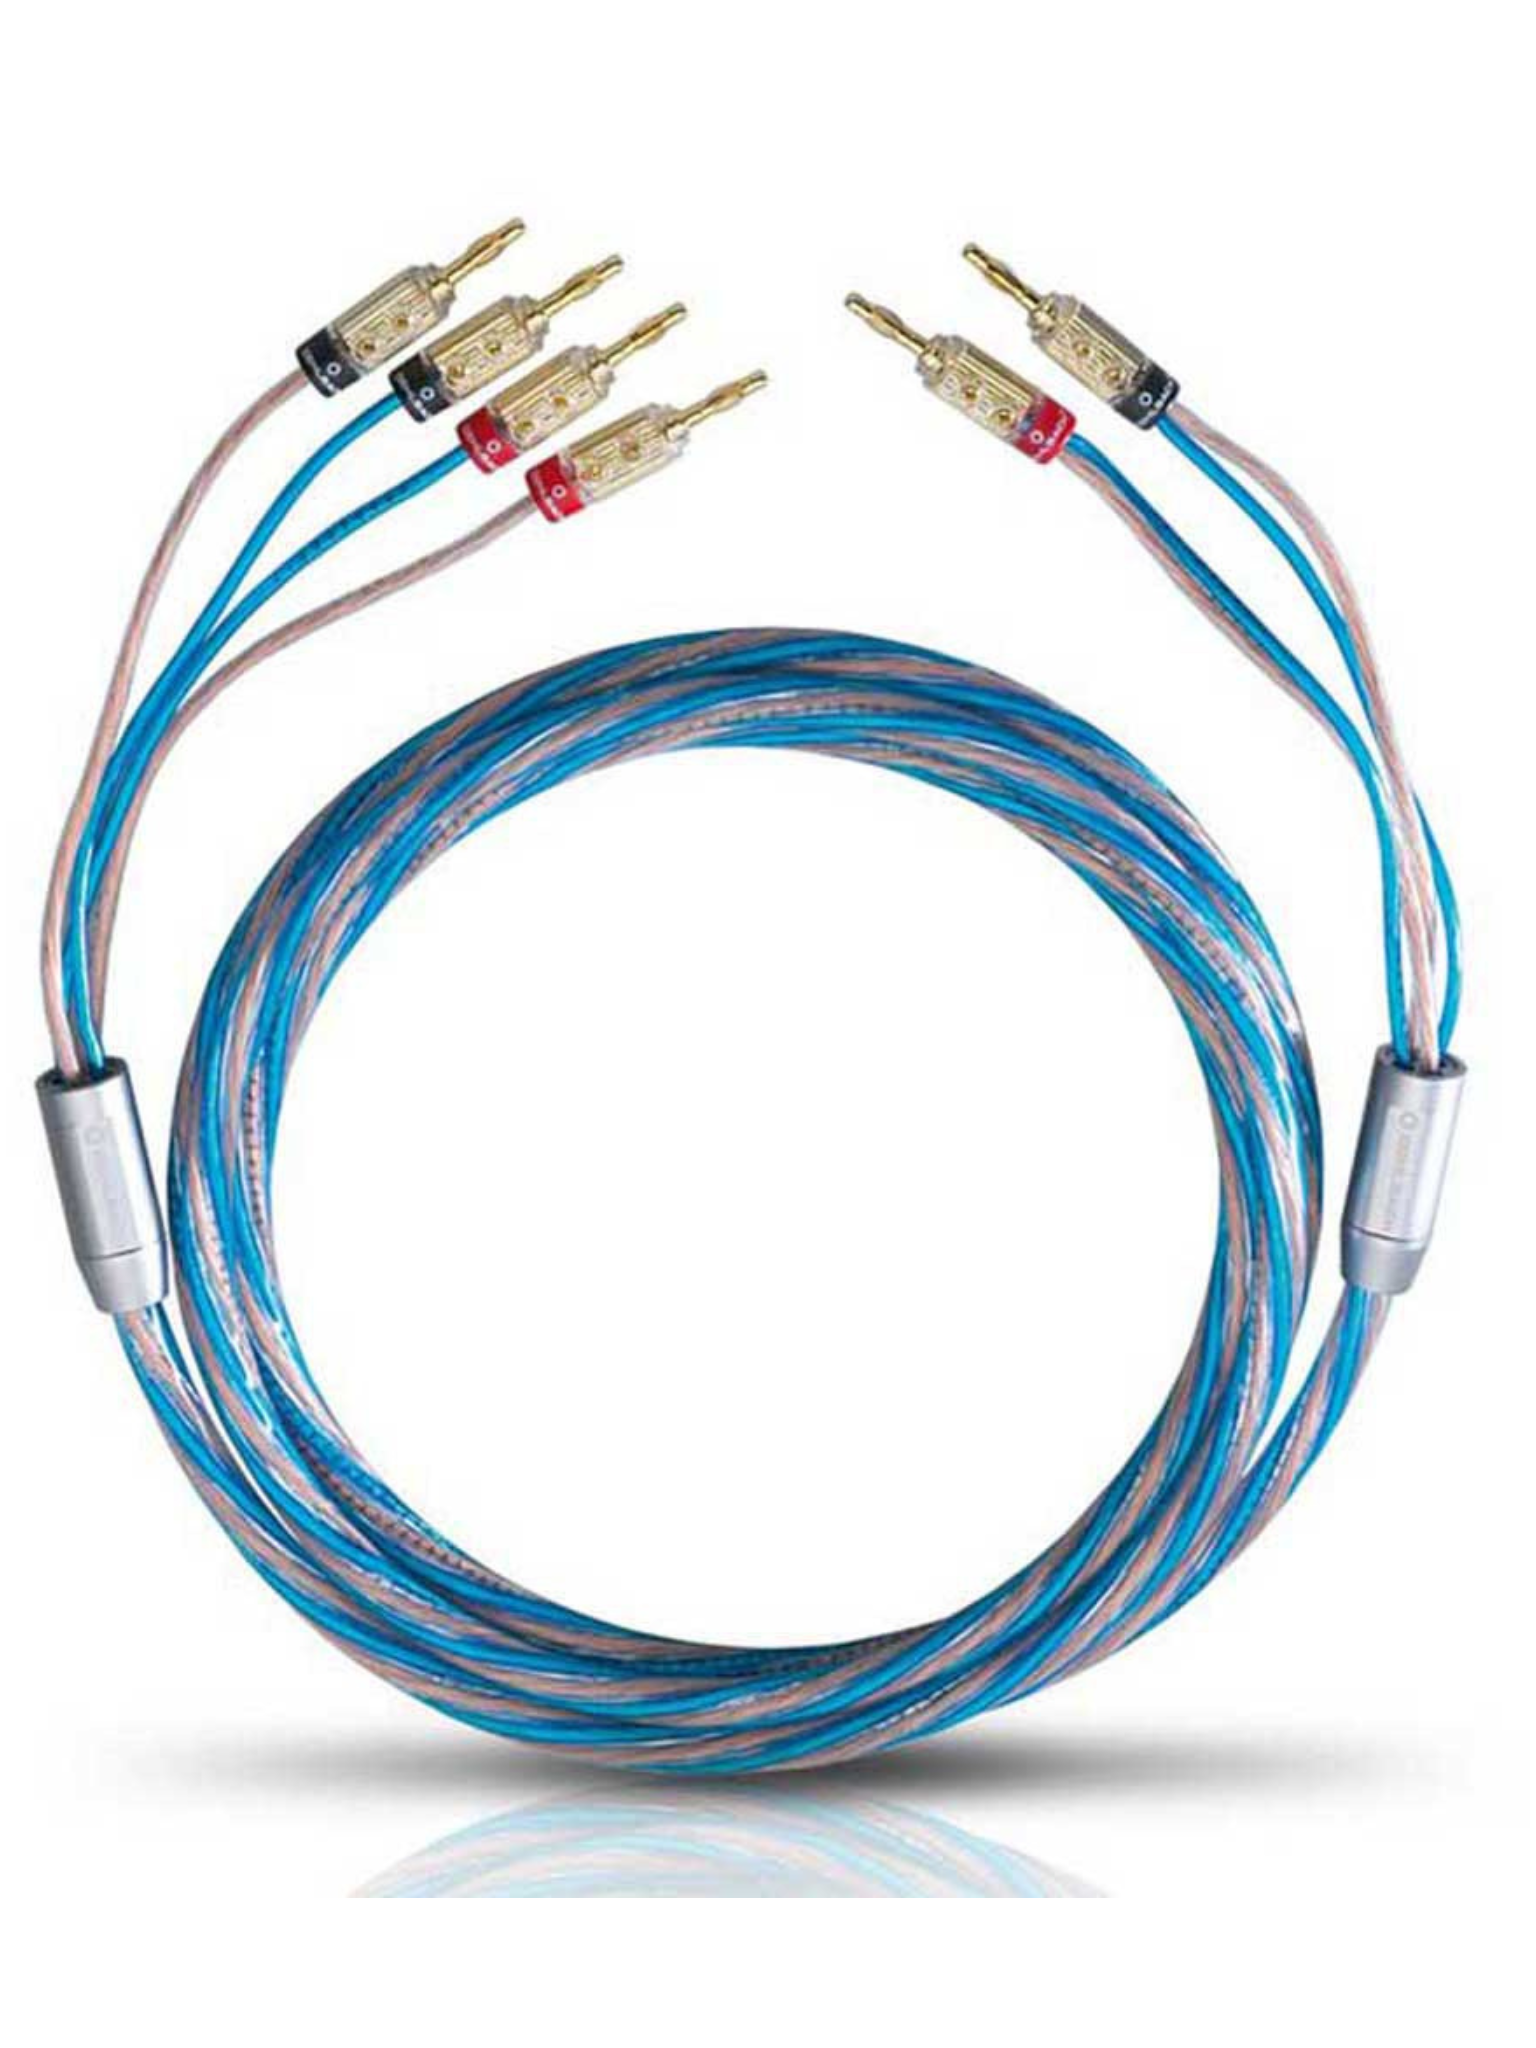 A/V Cables & Electronics